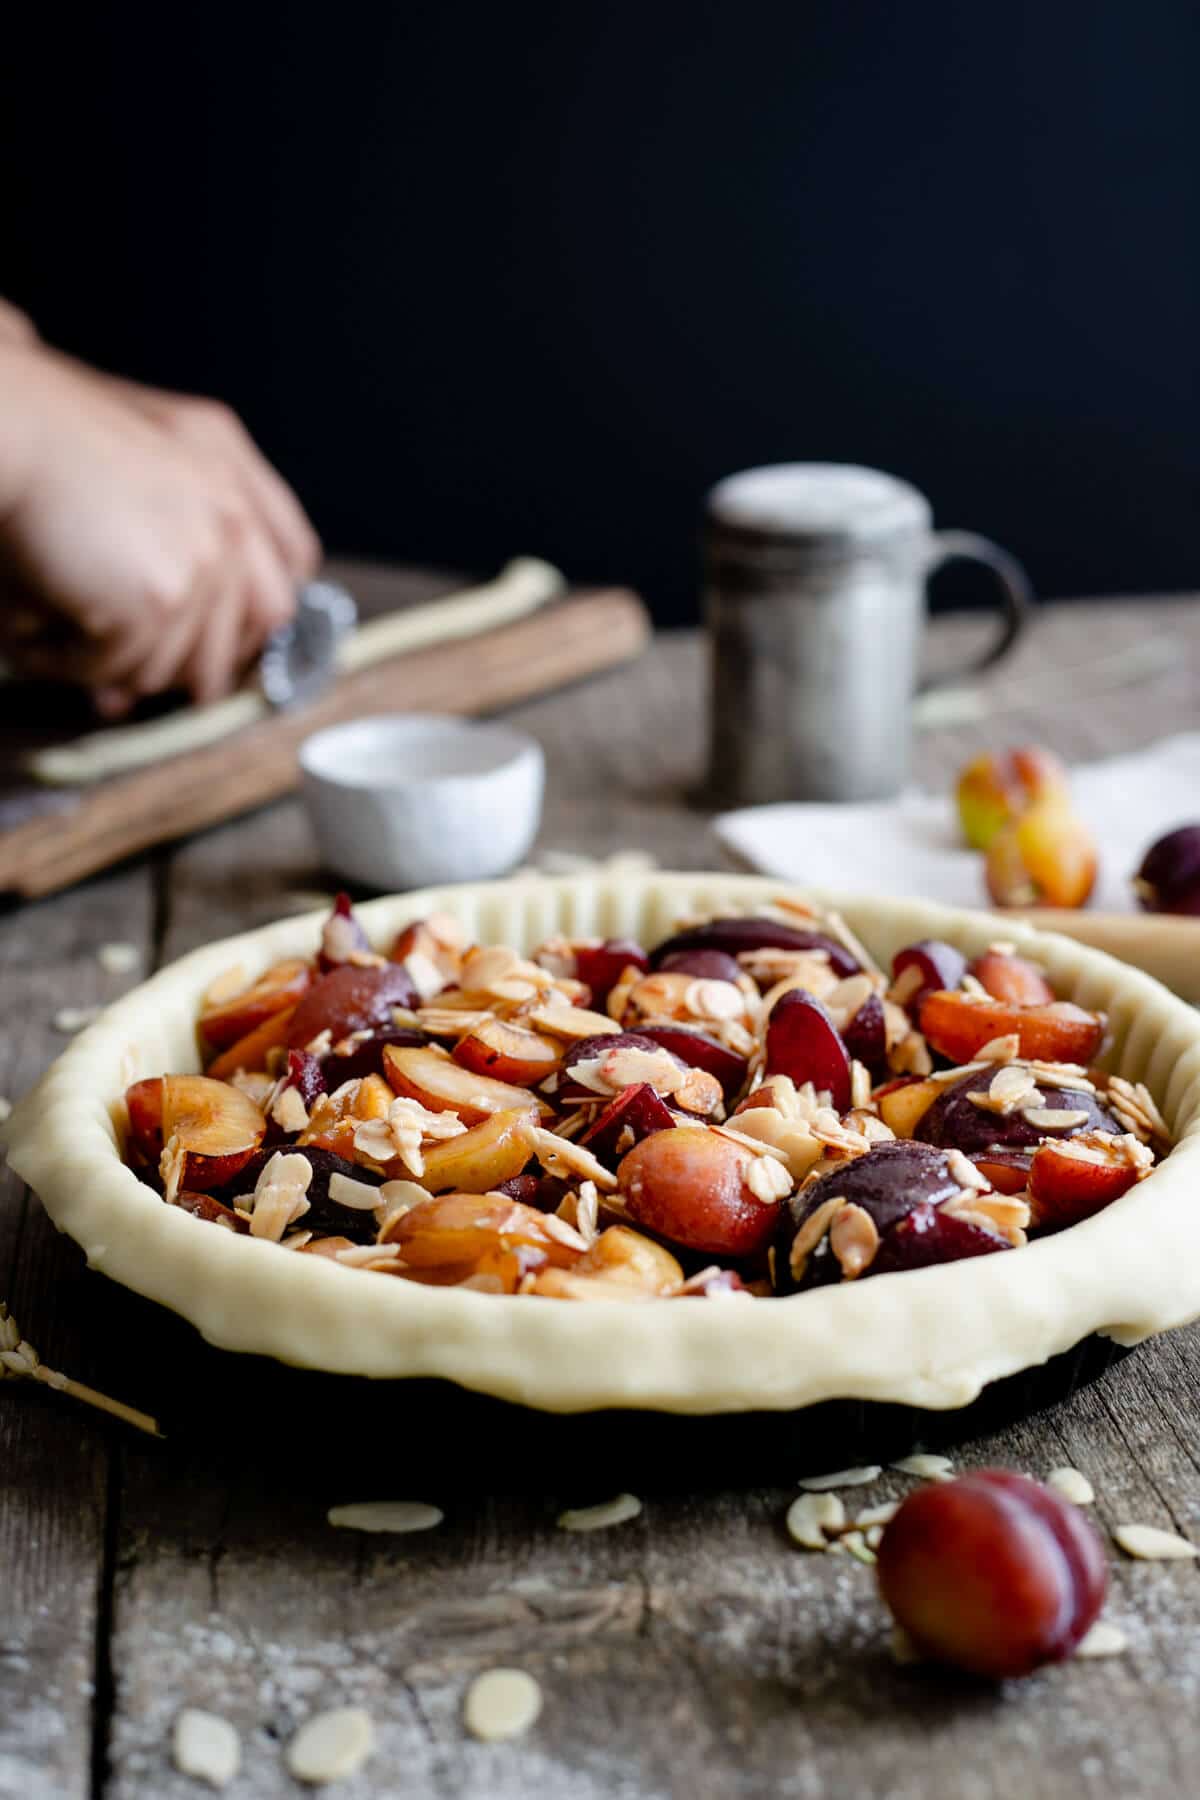 Unbaked plum pie with almonds